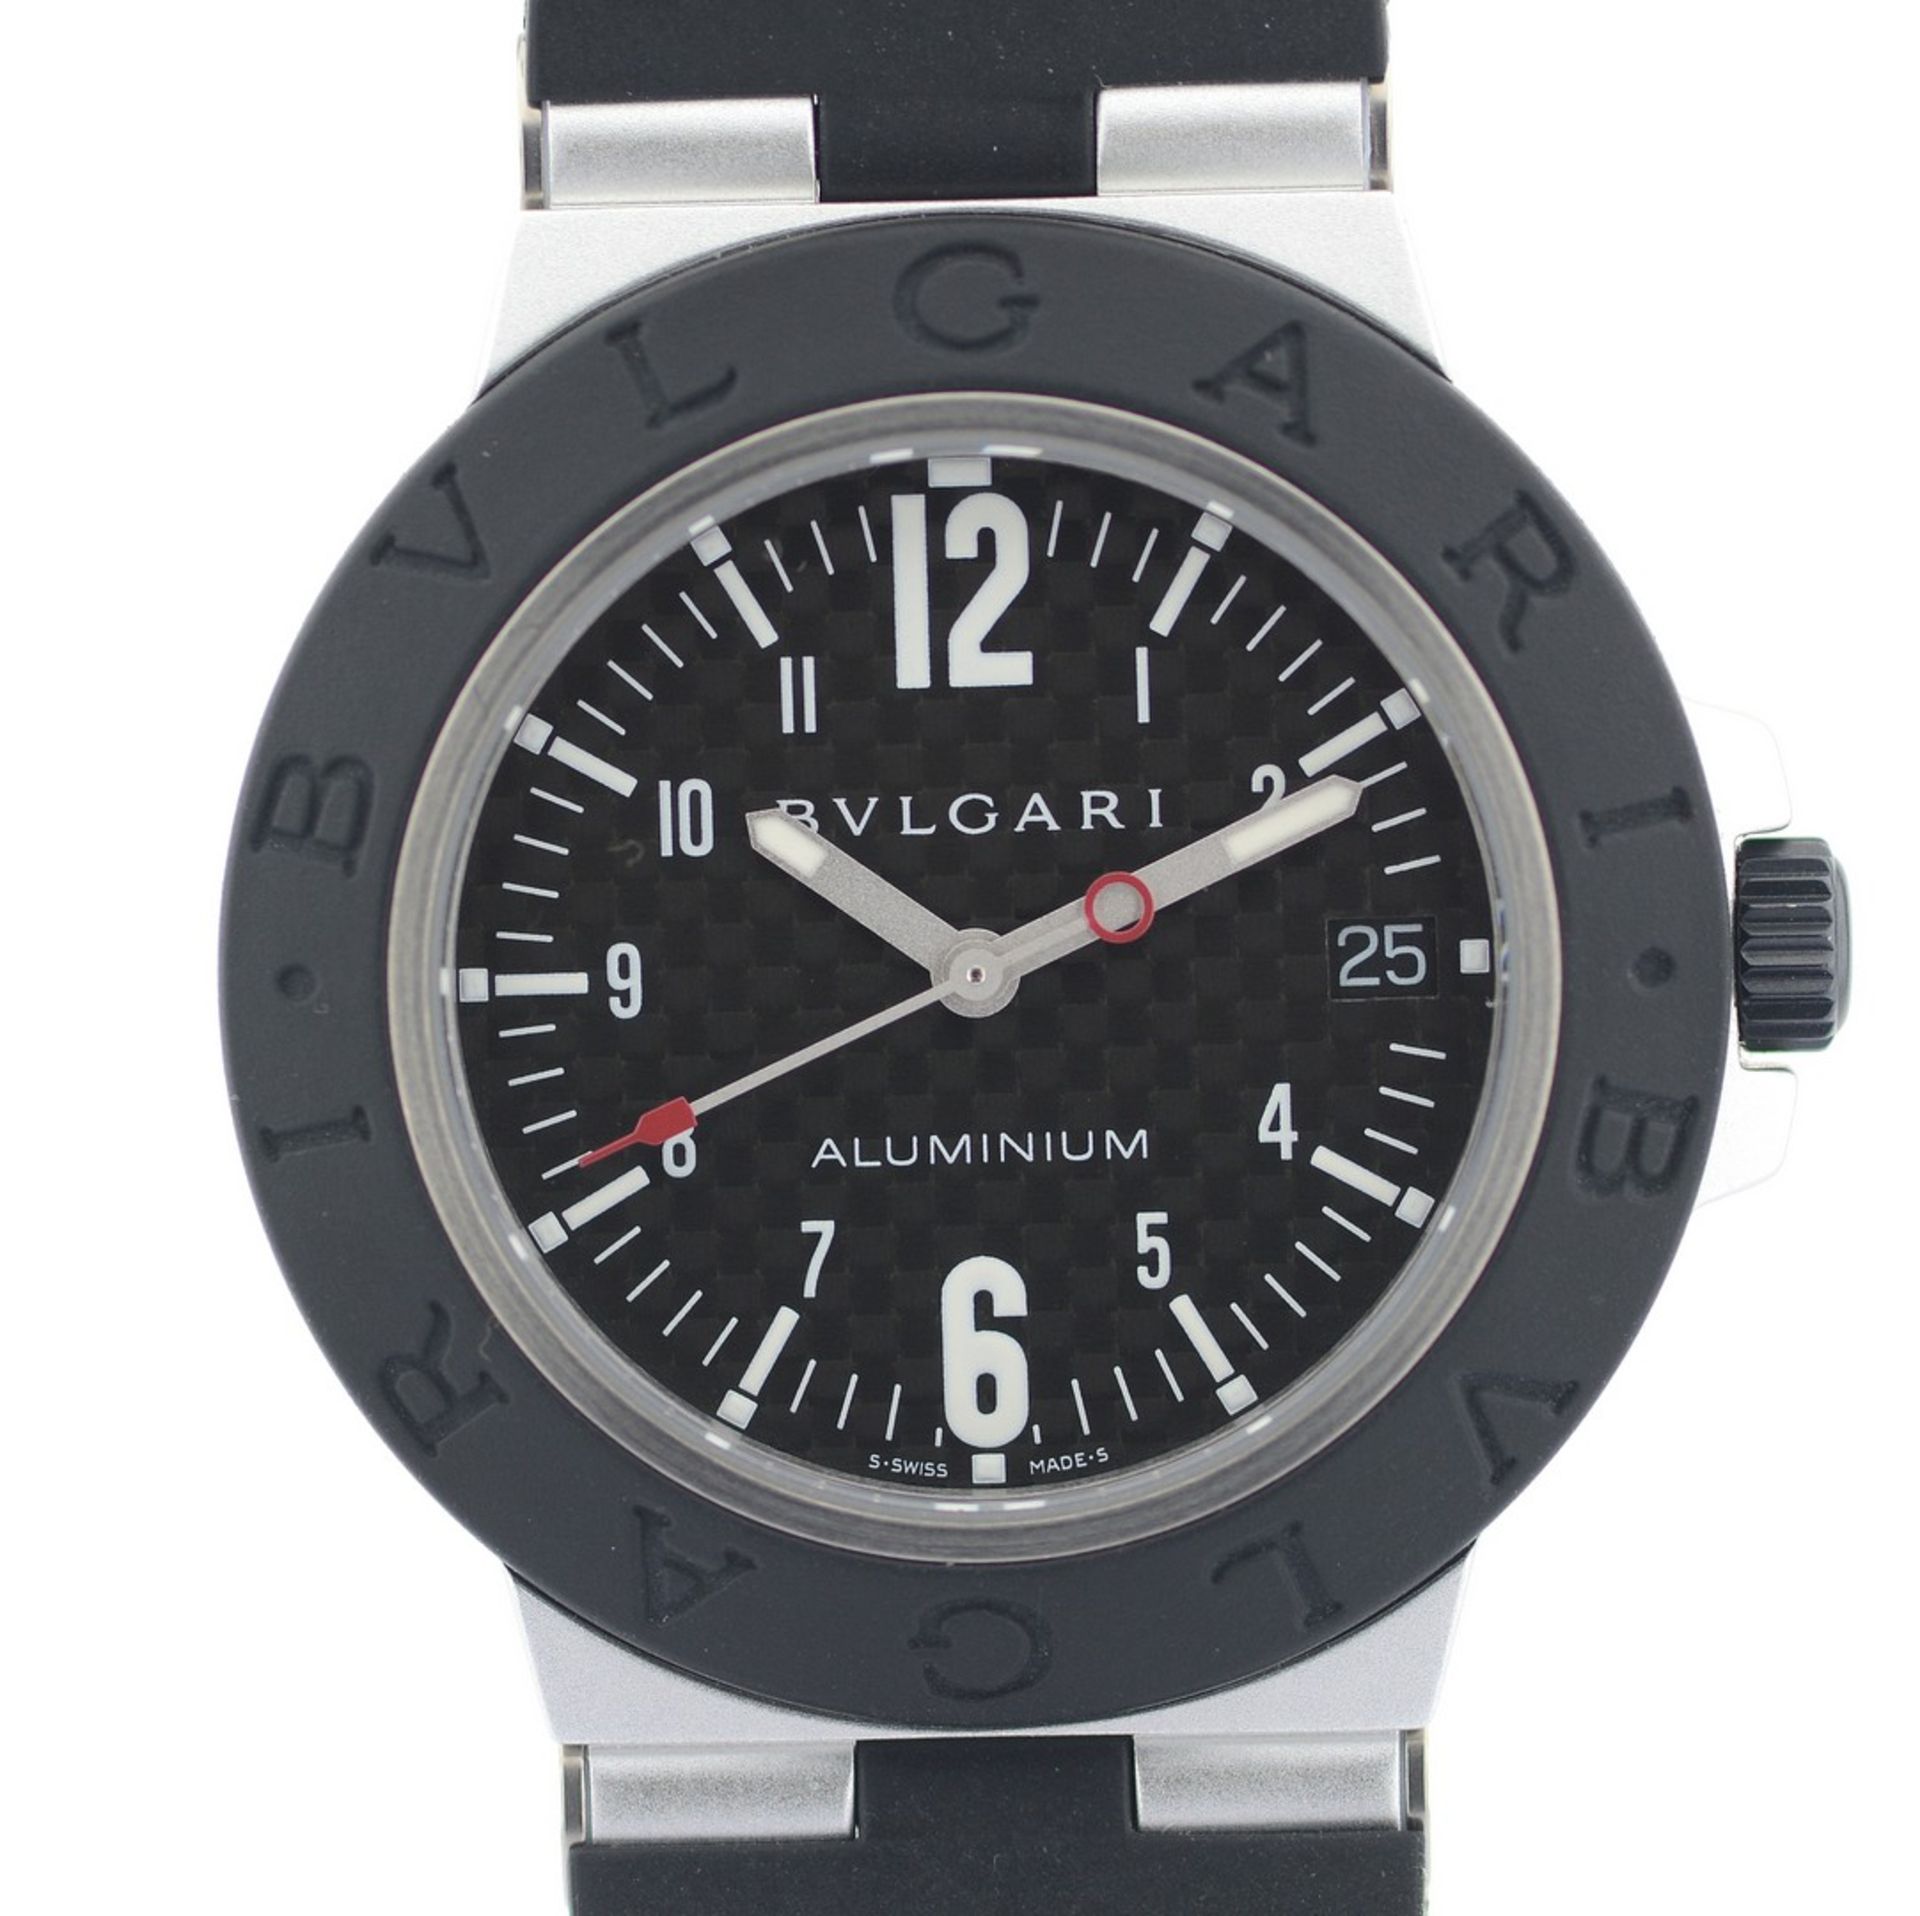 Bulgari / Diagono AL38TA - Gentlemen's Other Wrist Watch - Image 10 of 10